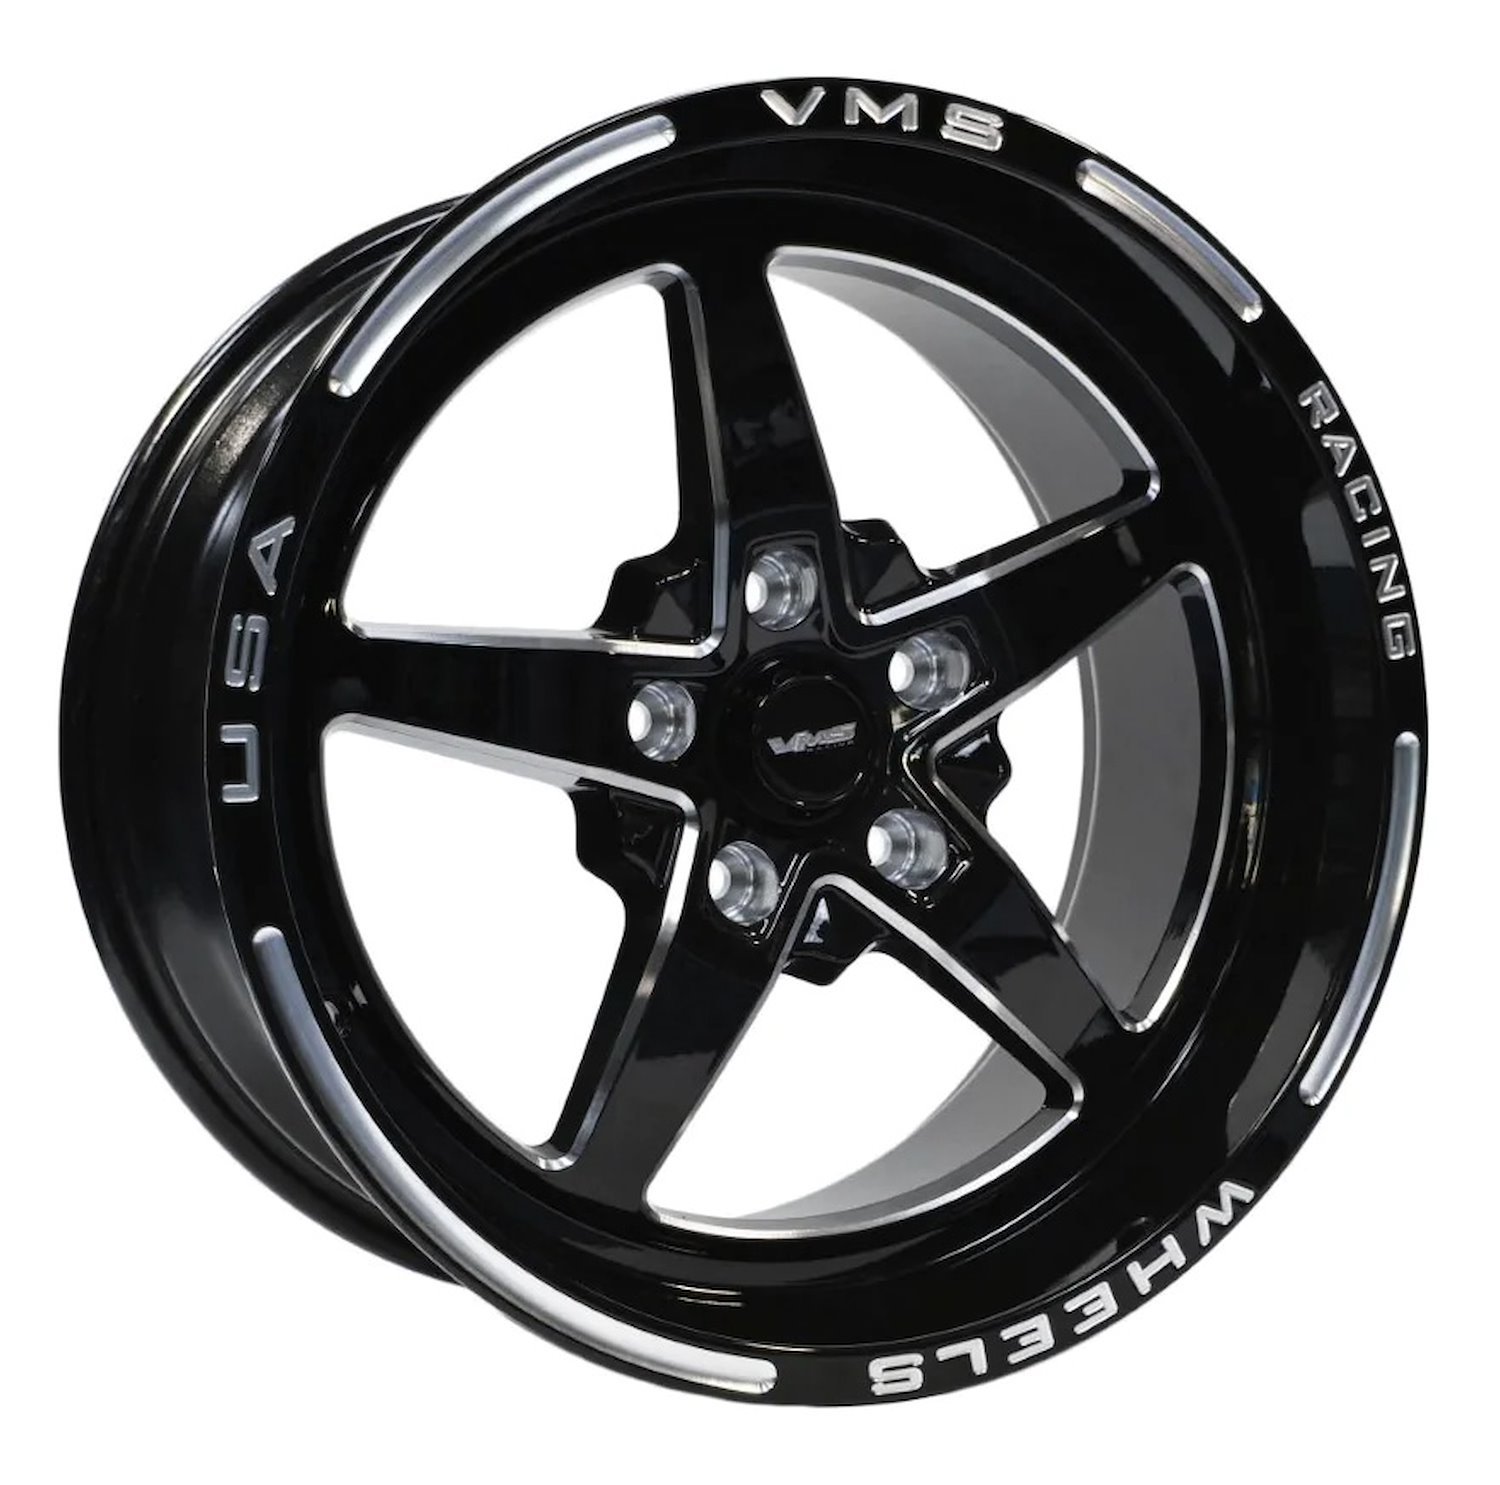 VWST012 V-Star Wheel, Size: 17" x 9", Bolt Pattern: 5 x 4 1/2" (114.3 mm) [Finish: Gloss Black Milled]